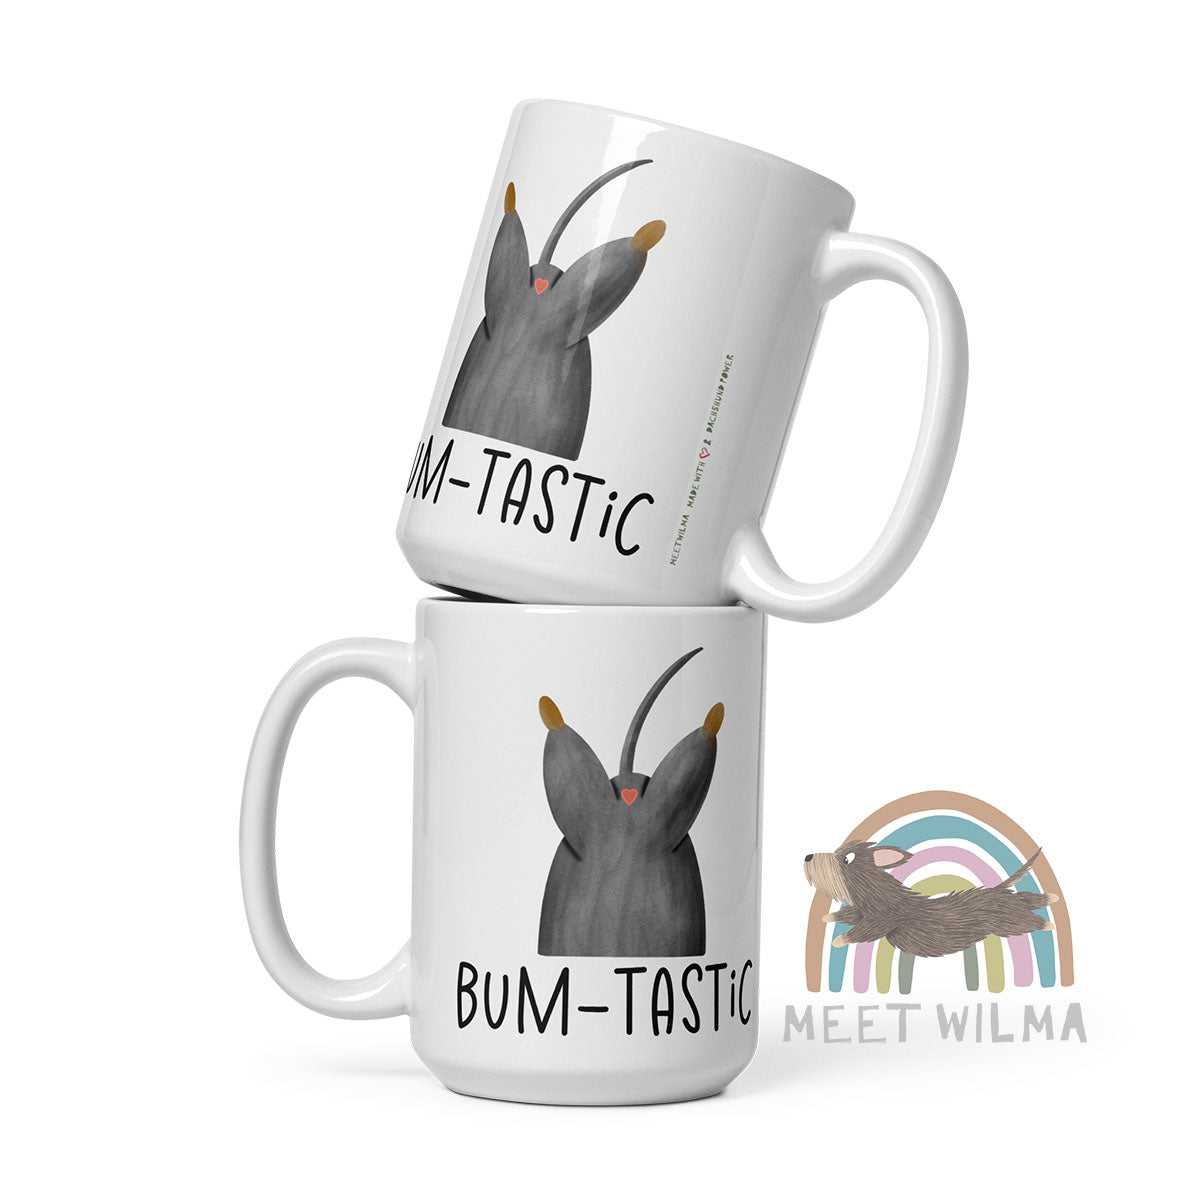 Mug "BUM-tastic"